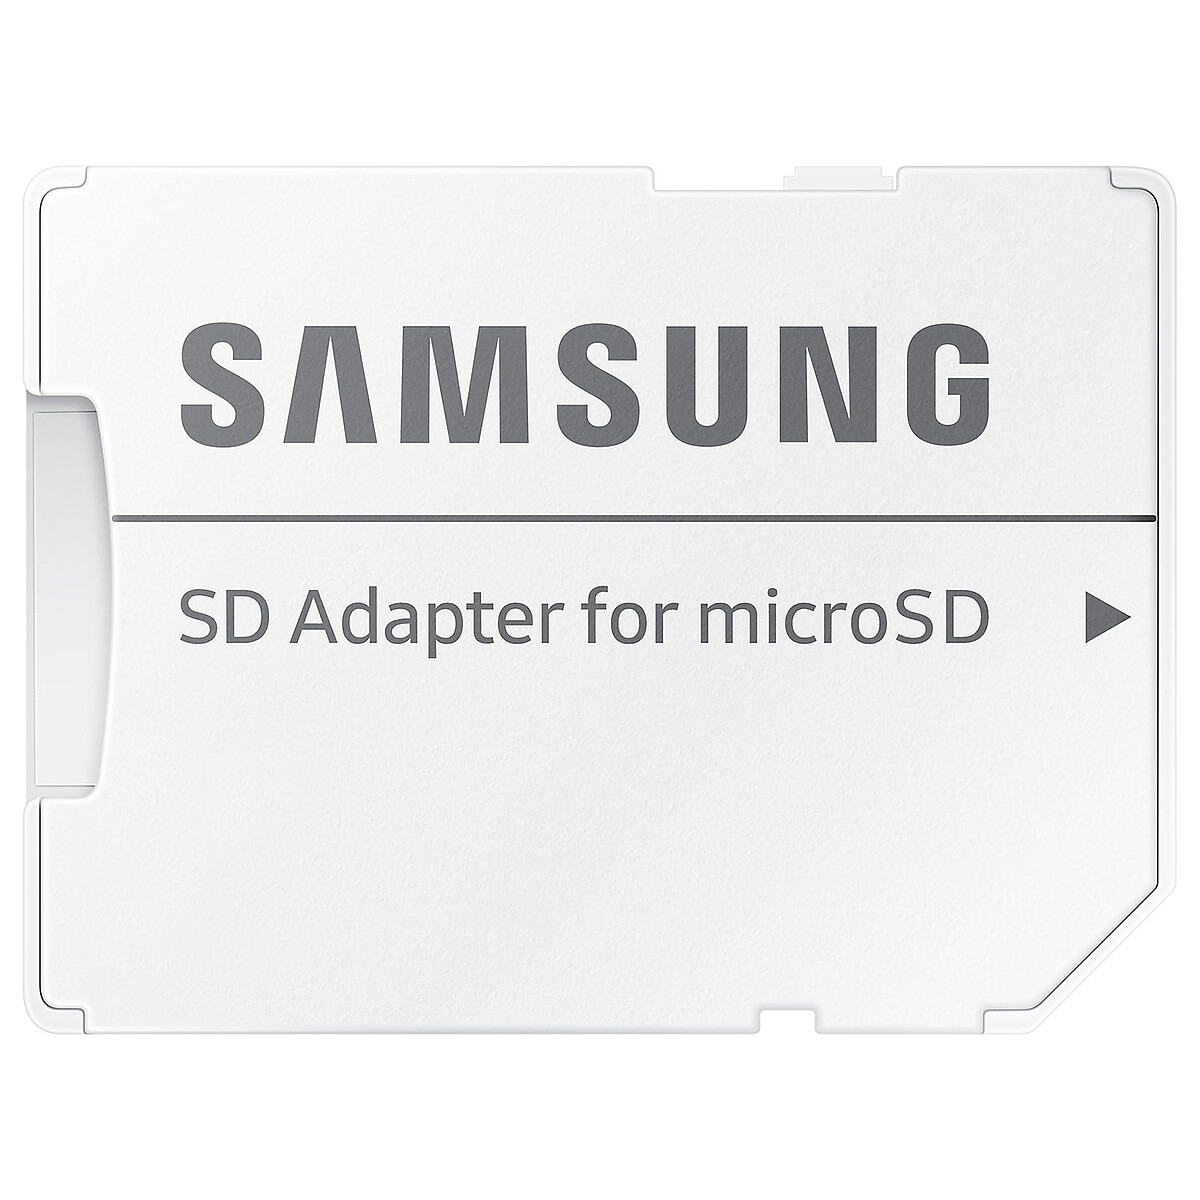 Samsung Pro Plus microSD 256 Go pas cher - HardWare.fr